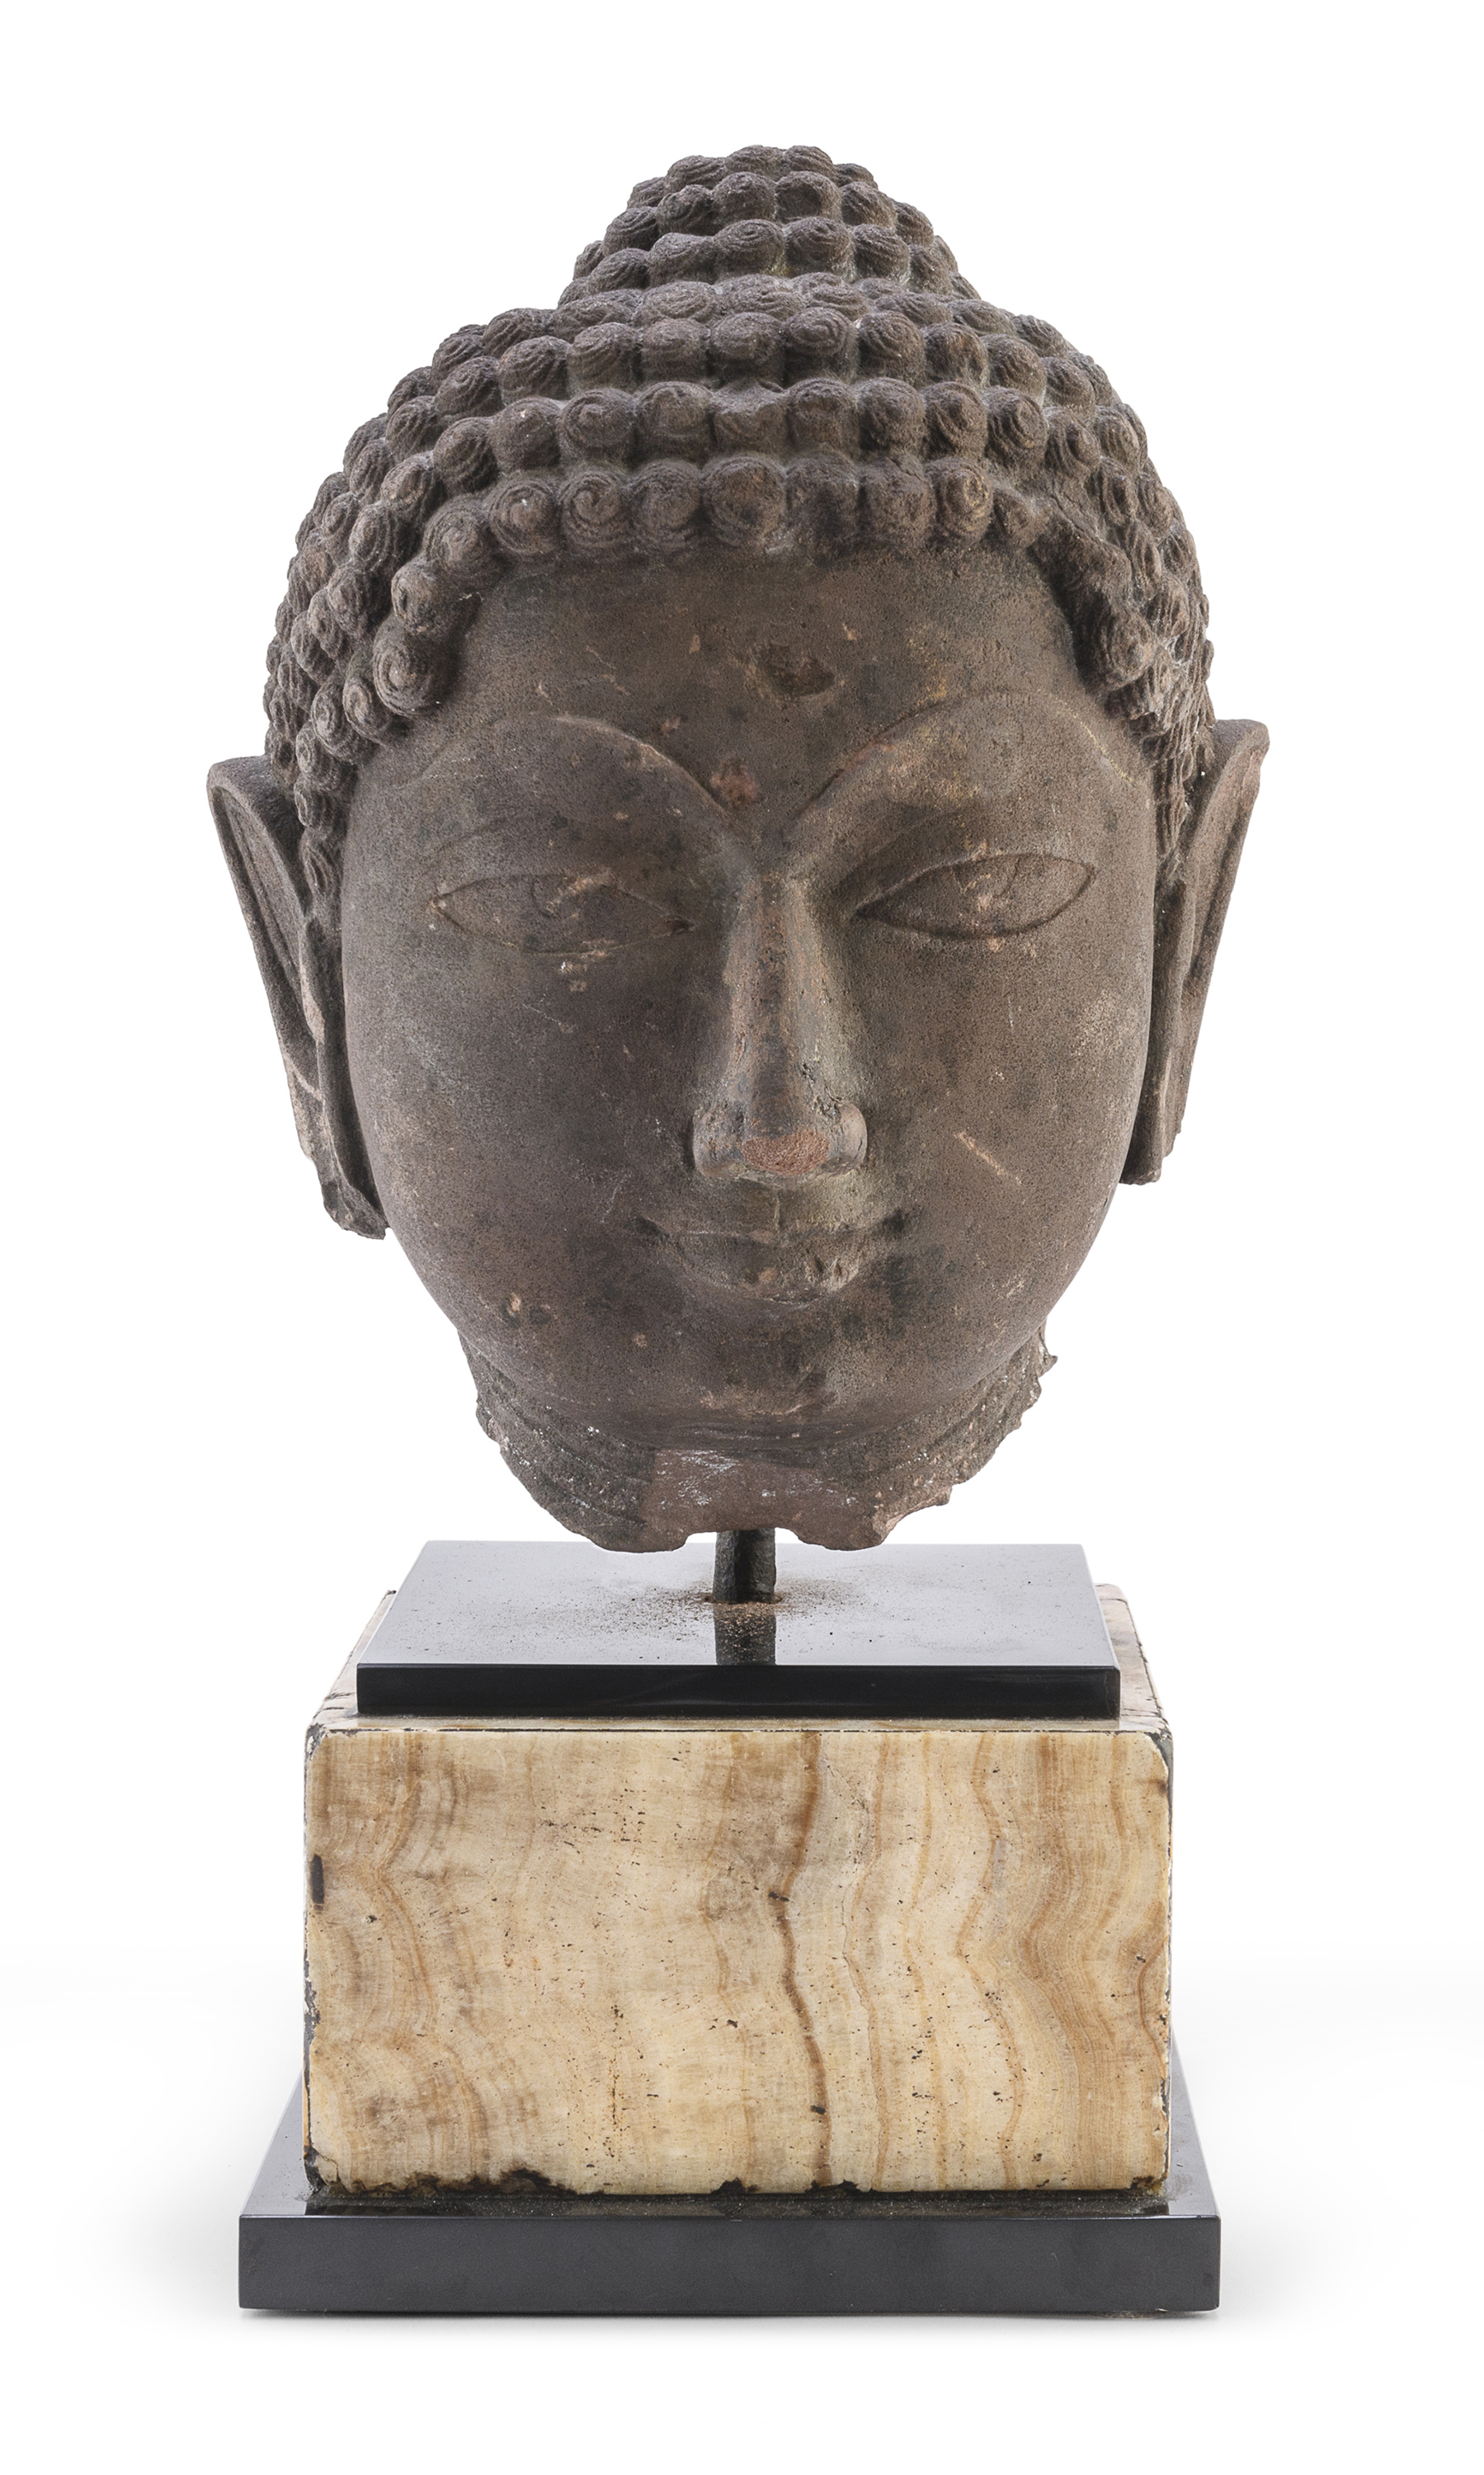 AN INDIAN SANDSTONE HEAD DEPICTING BUDDHA 10TH CENTURY.